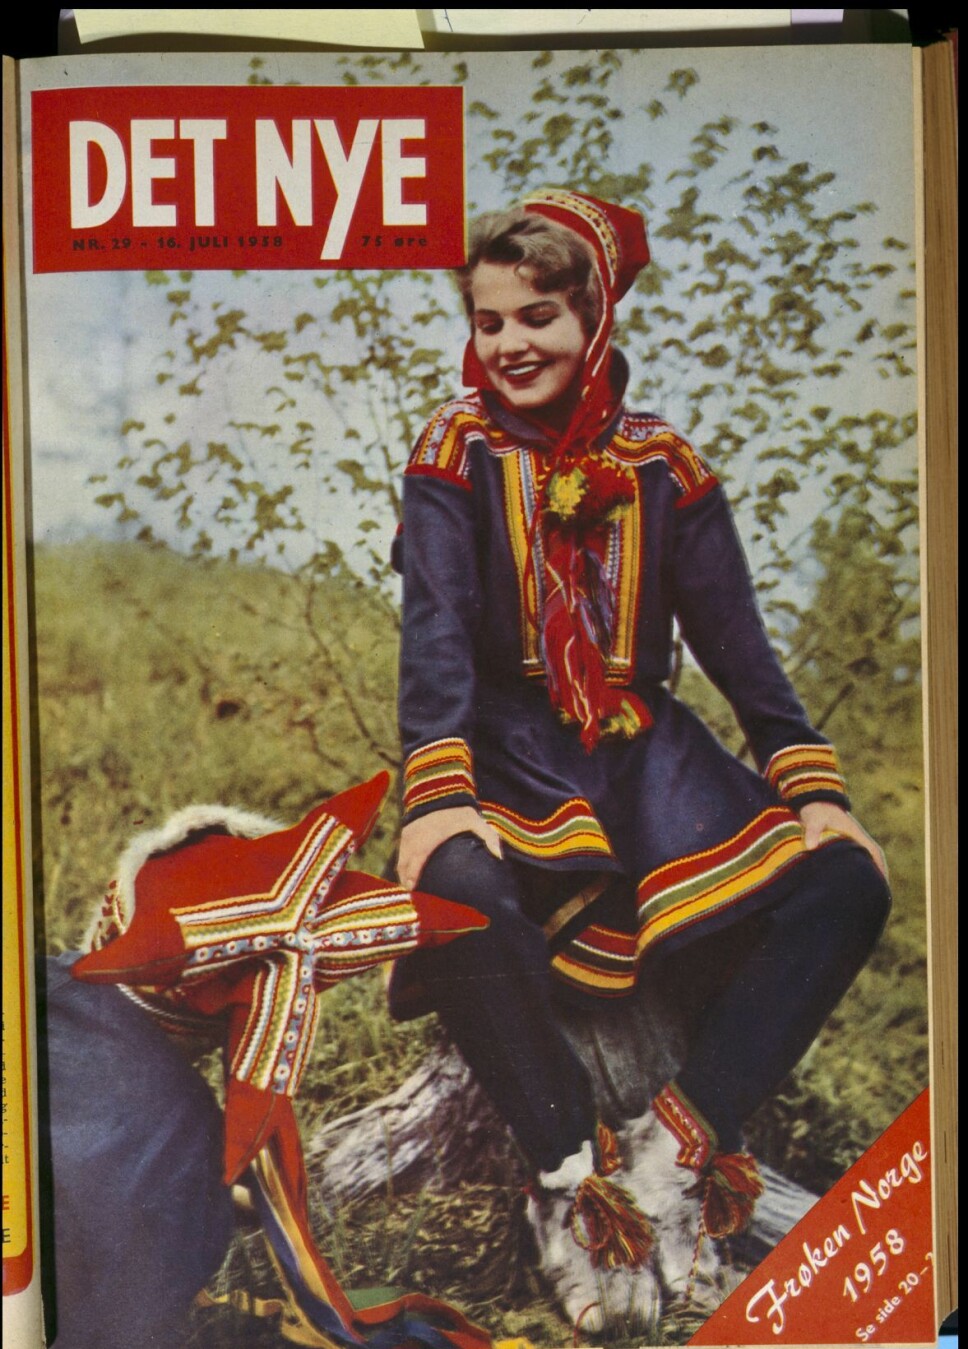 SAMISK KULTUR: Det Nye var tidlig ute med å vise frem også den samiske kulturen i magasinet - faktisk allerede i 1957.